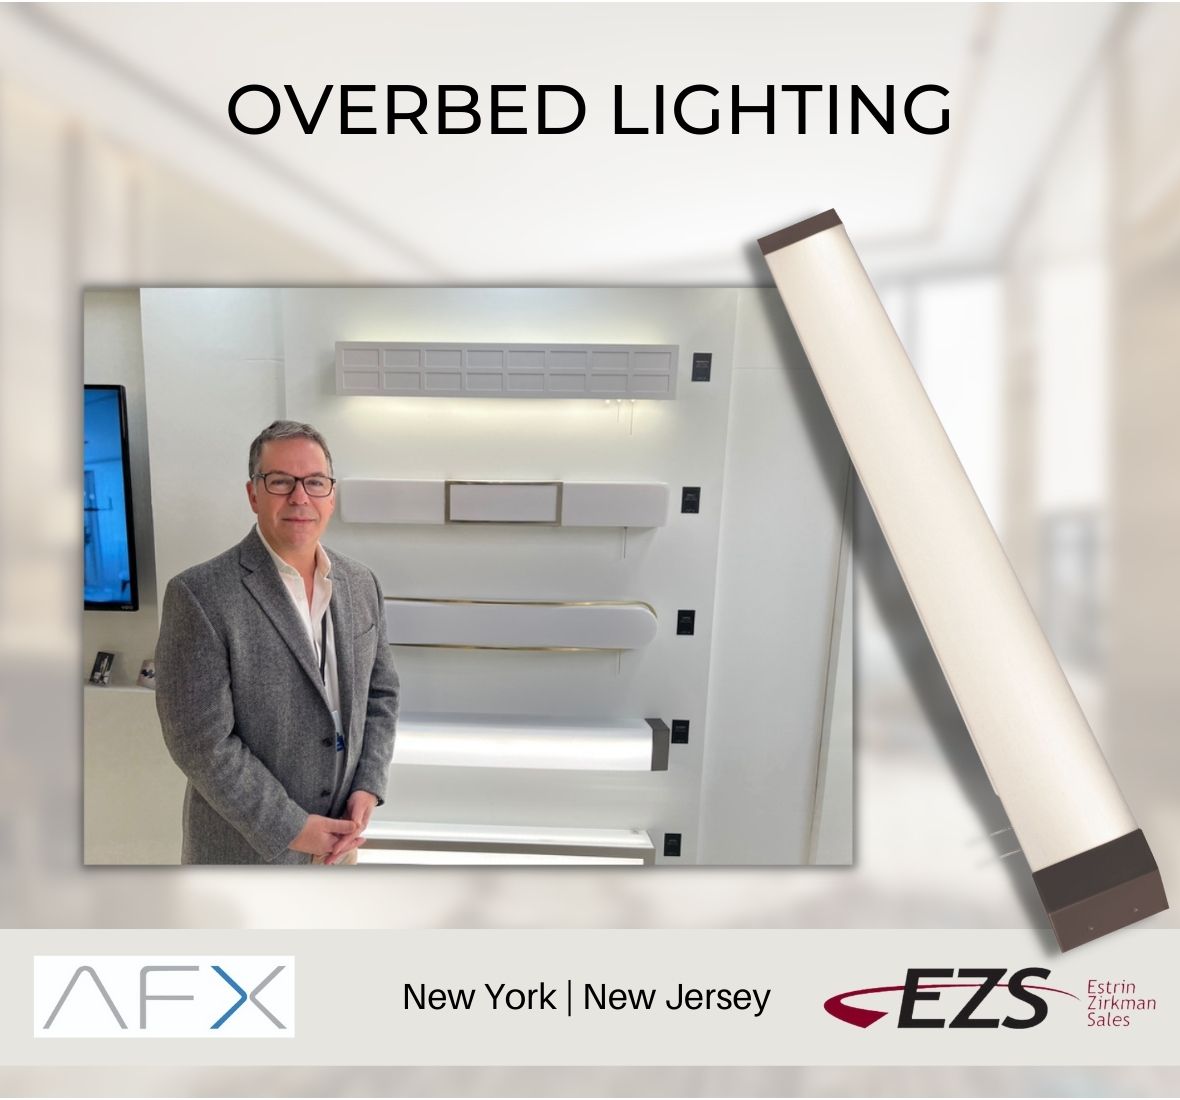 Over bed Lighting Assisted living hospitals new york New Jersey Estrin Zirkman